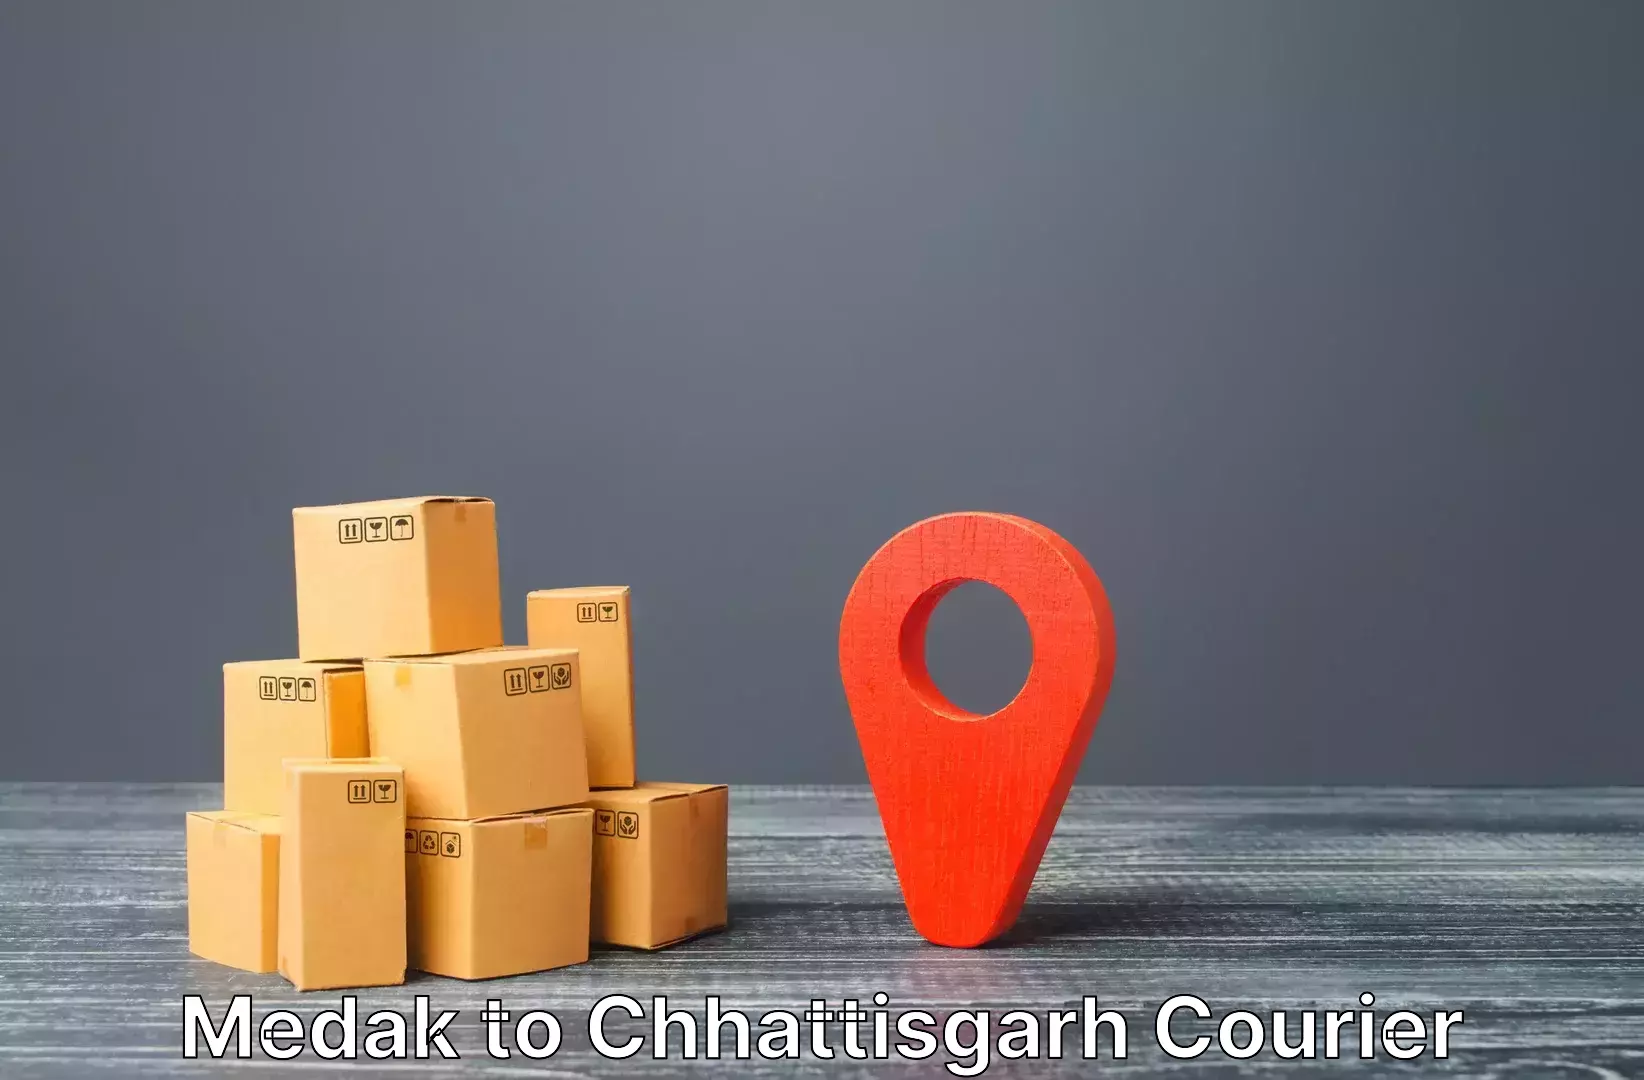 Same day luggage service Medak to Chhattisgarh